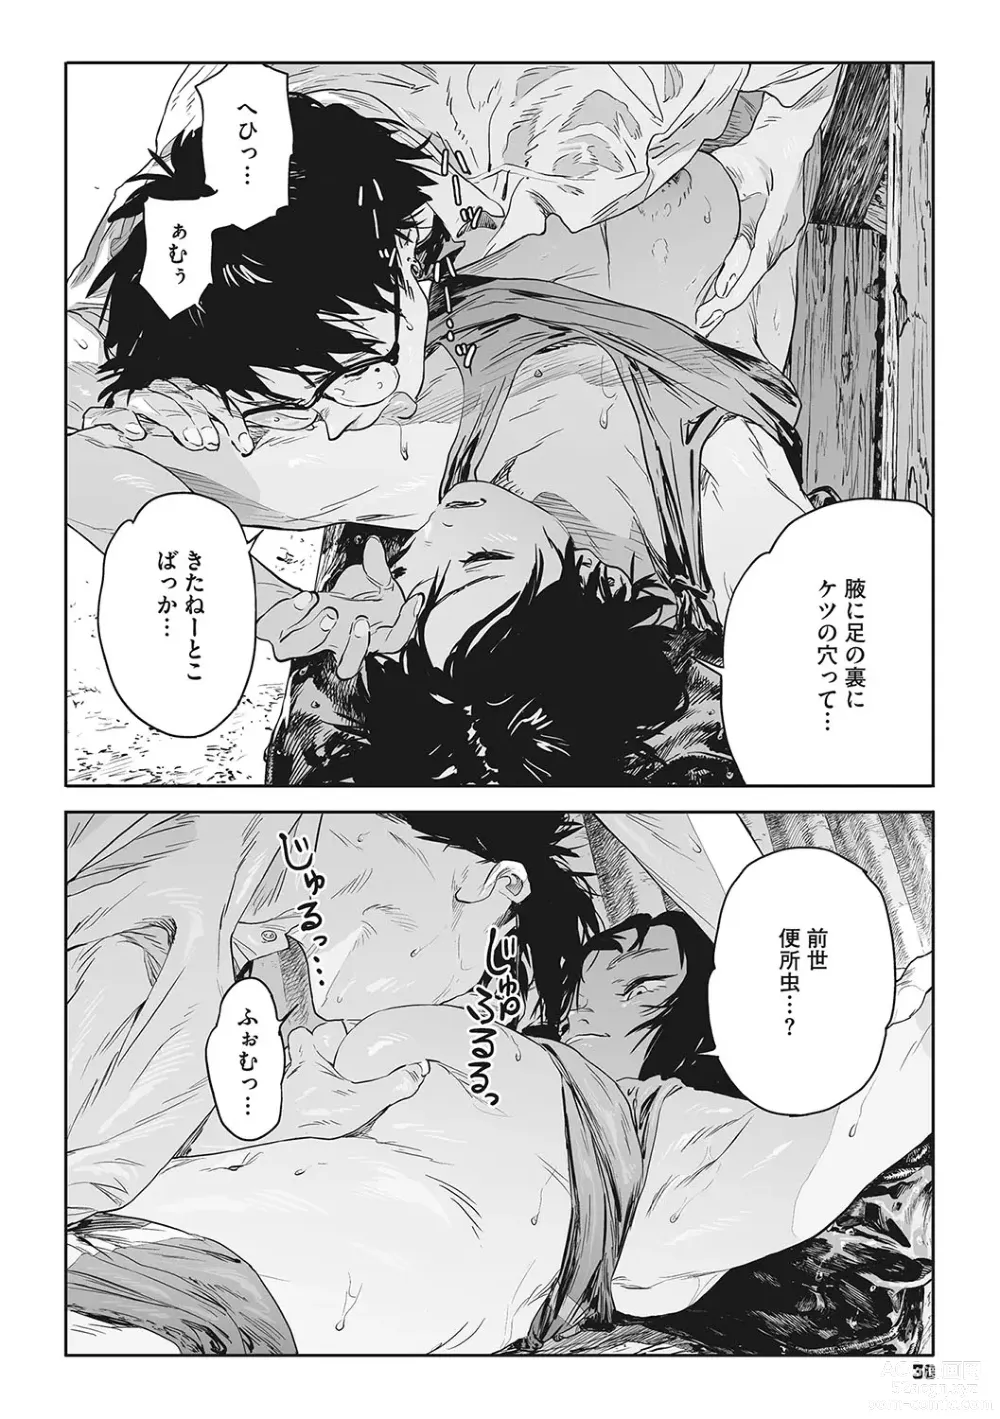 Page 29 of manga Ito o Yoru